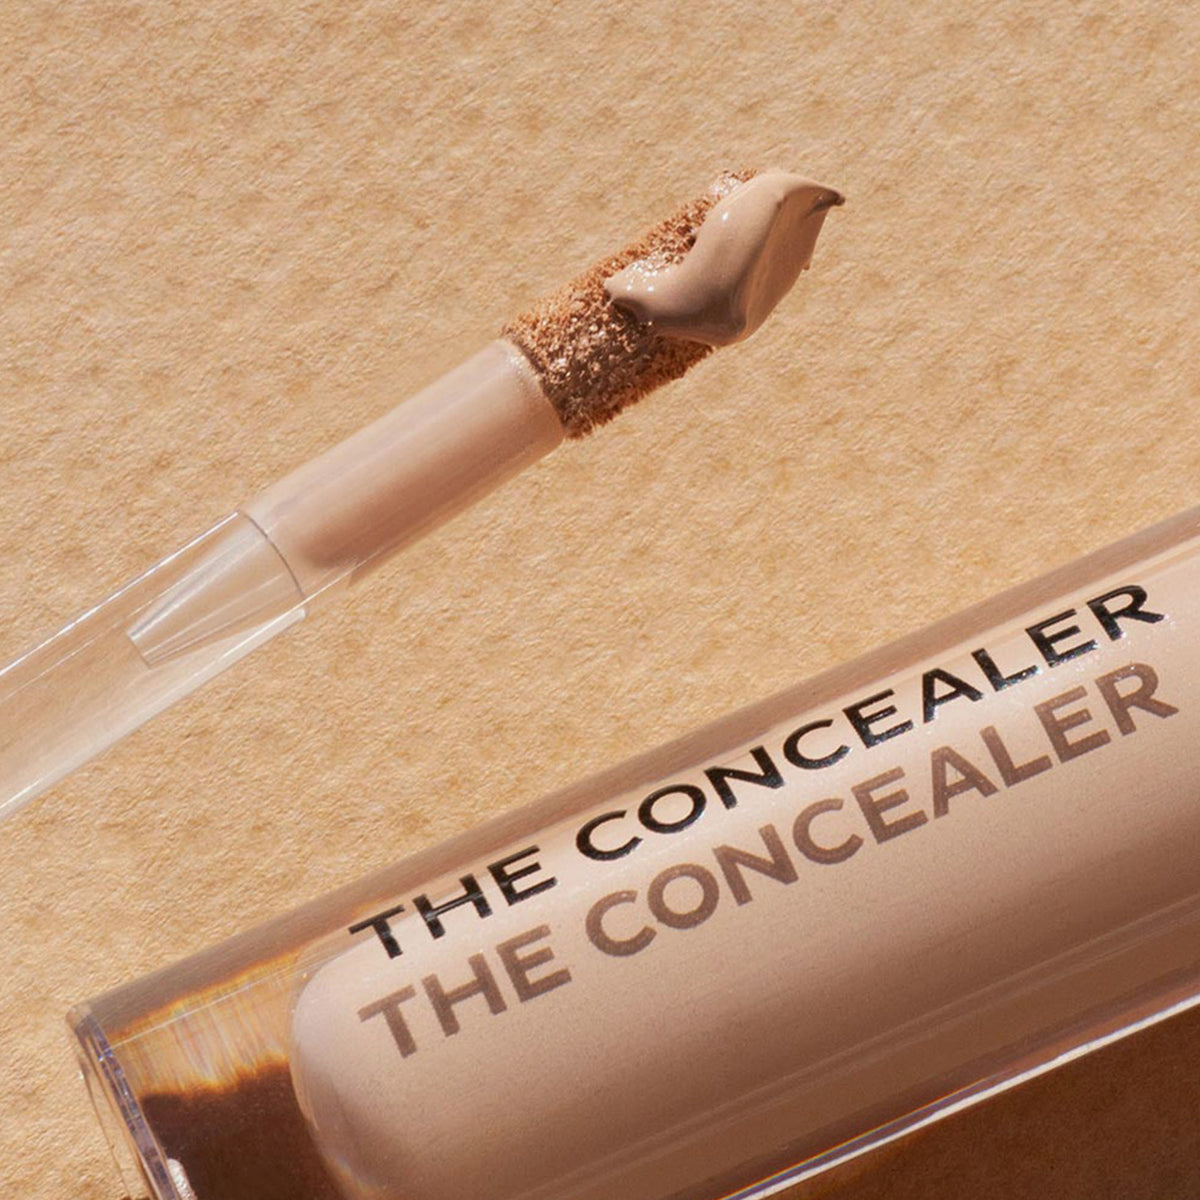 The Concealer